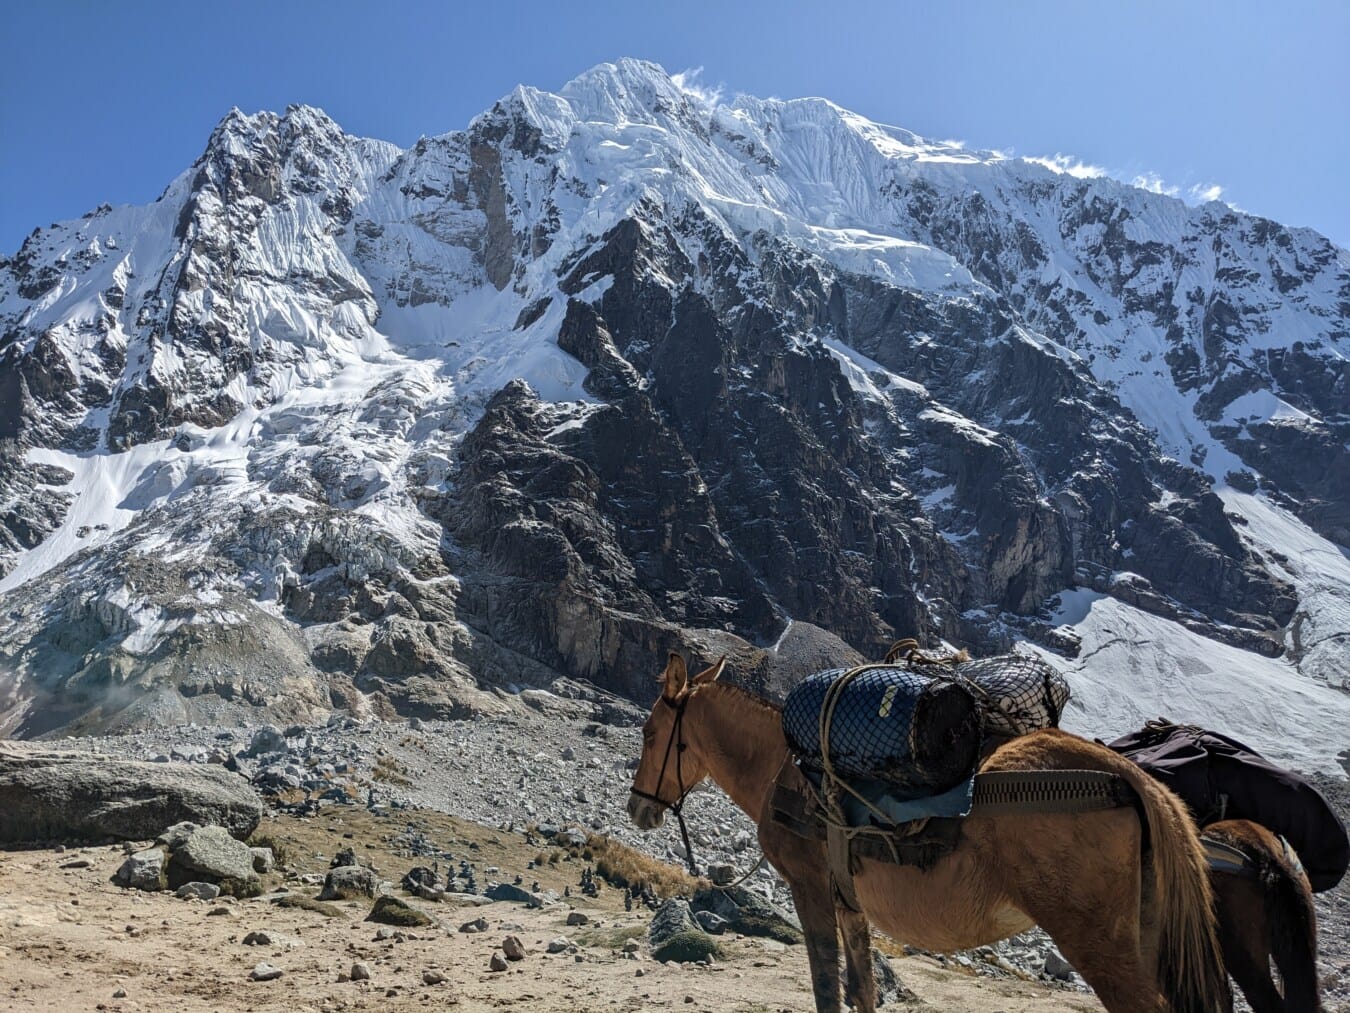 caballo, llevar, equipaje, pico de la montaña, exploración, expedición, pico, montañas, paisaje, montaña